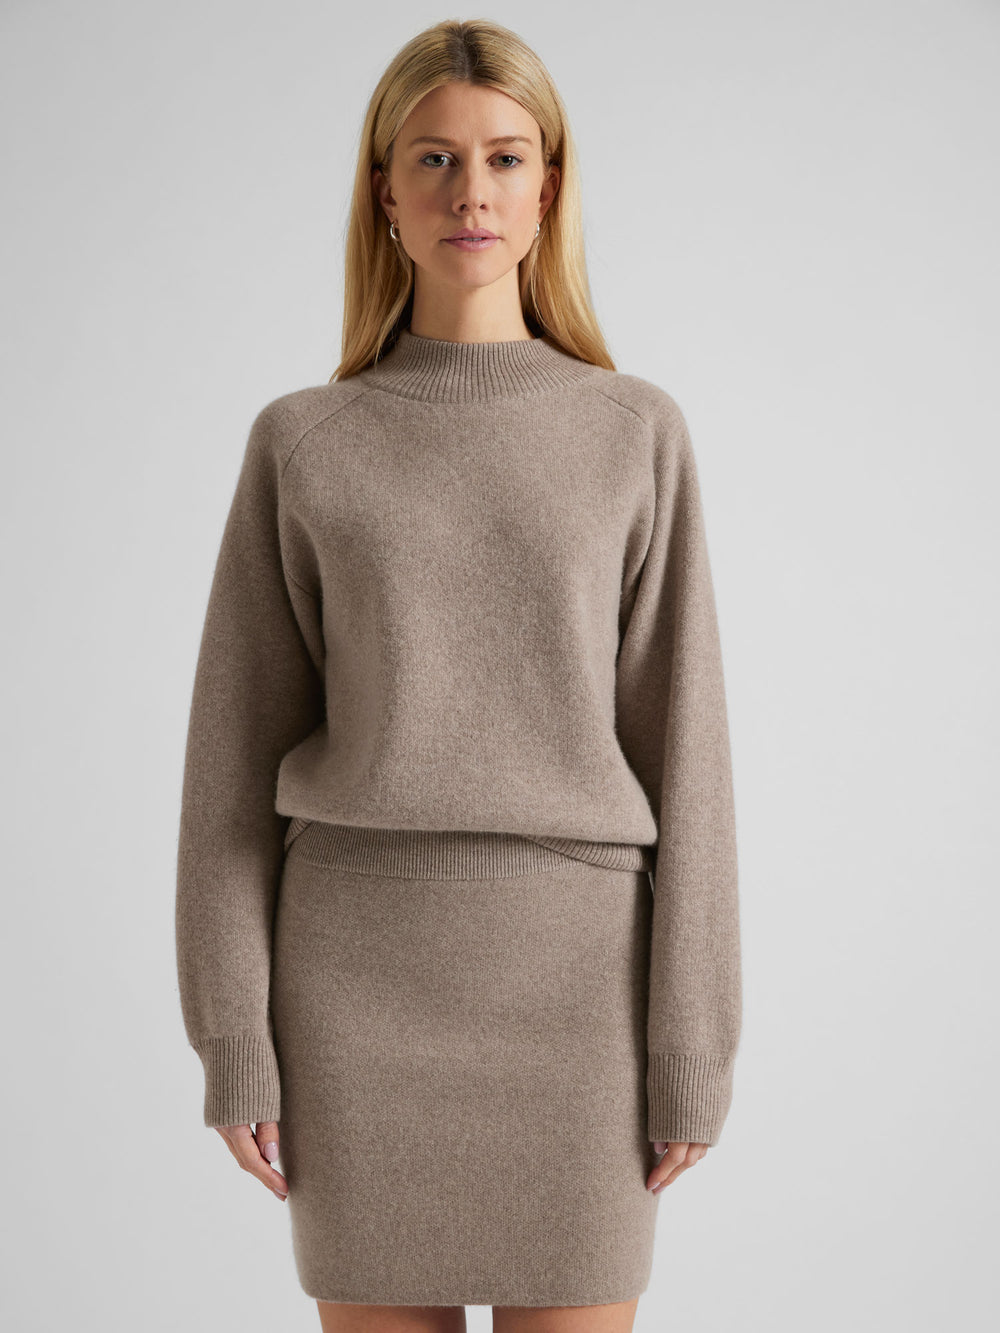 Cashmere skirt "Olava" in 100% pure cashmere. Scandinavian design by Kashmina. Color: Toast.